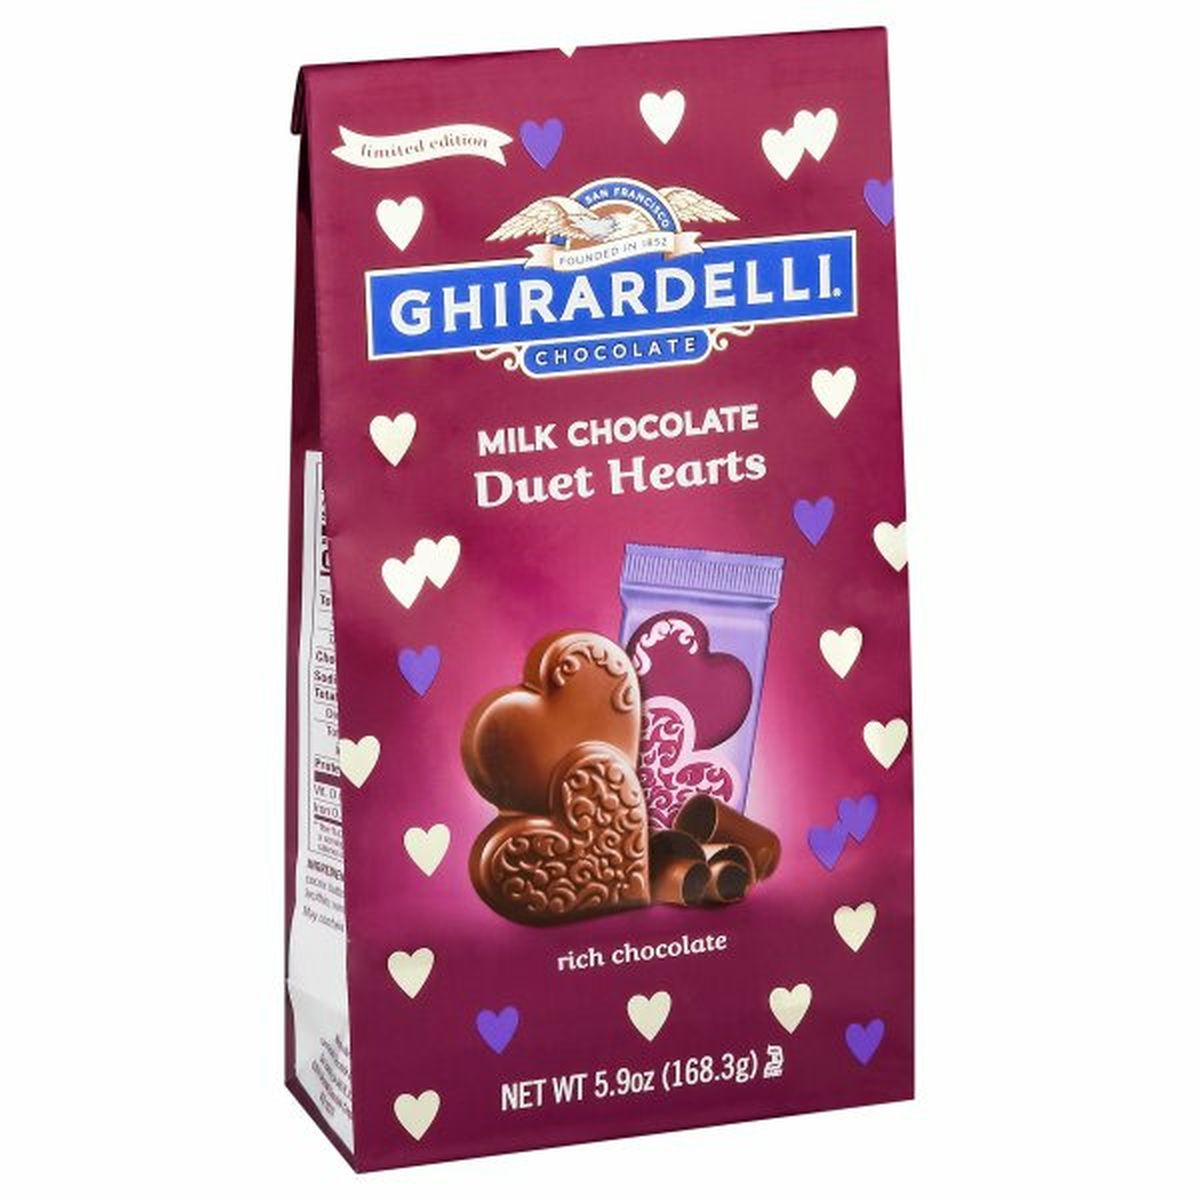 Calories in Ghirardelli Milk Chocolate, Duet Hearts